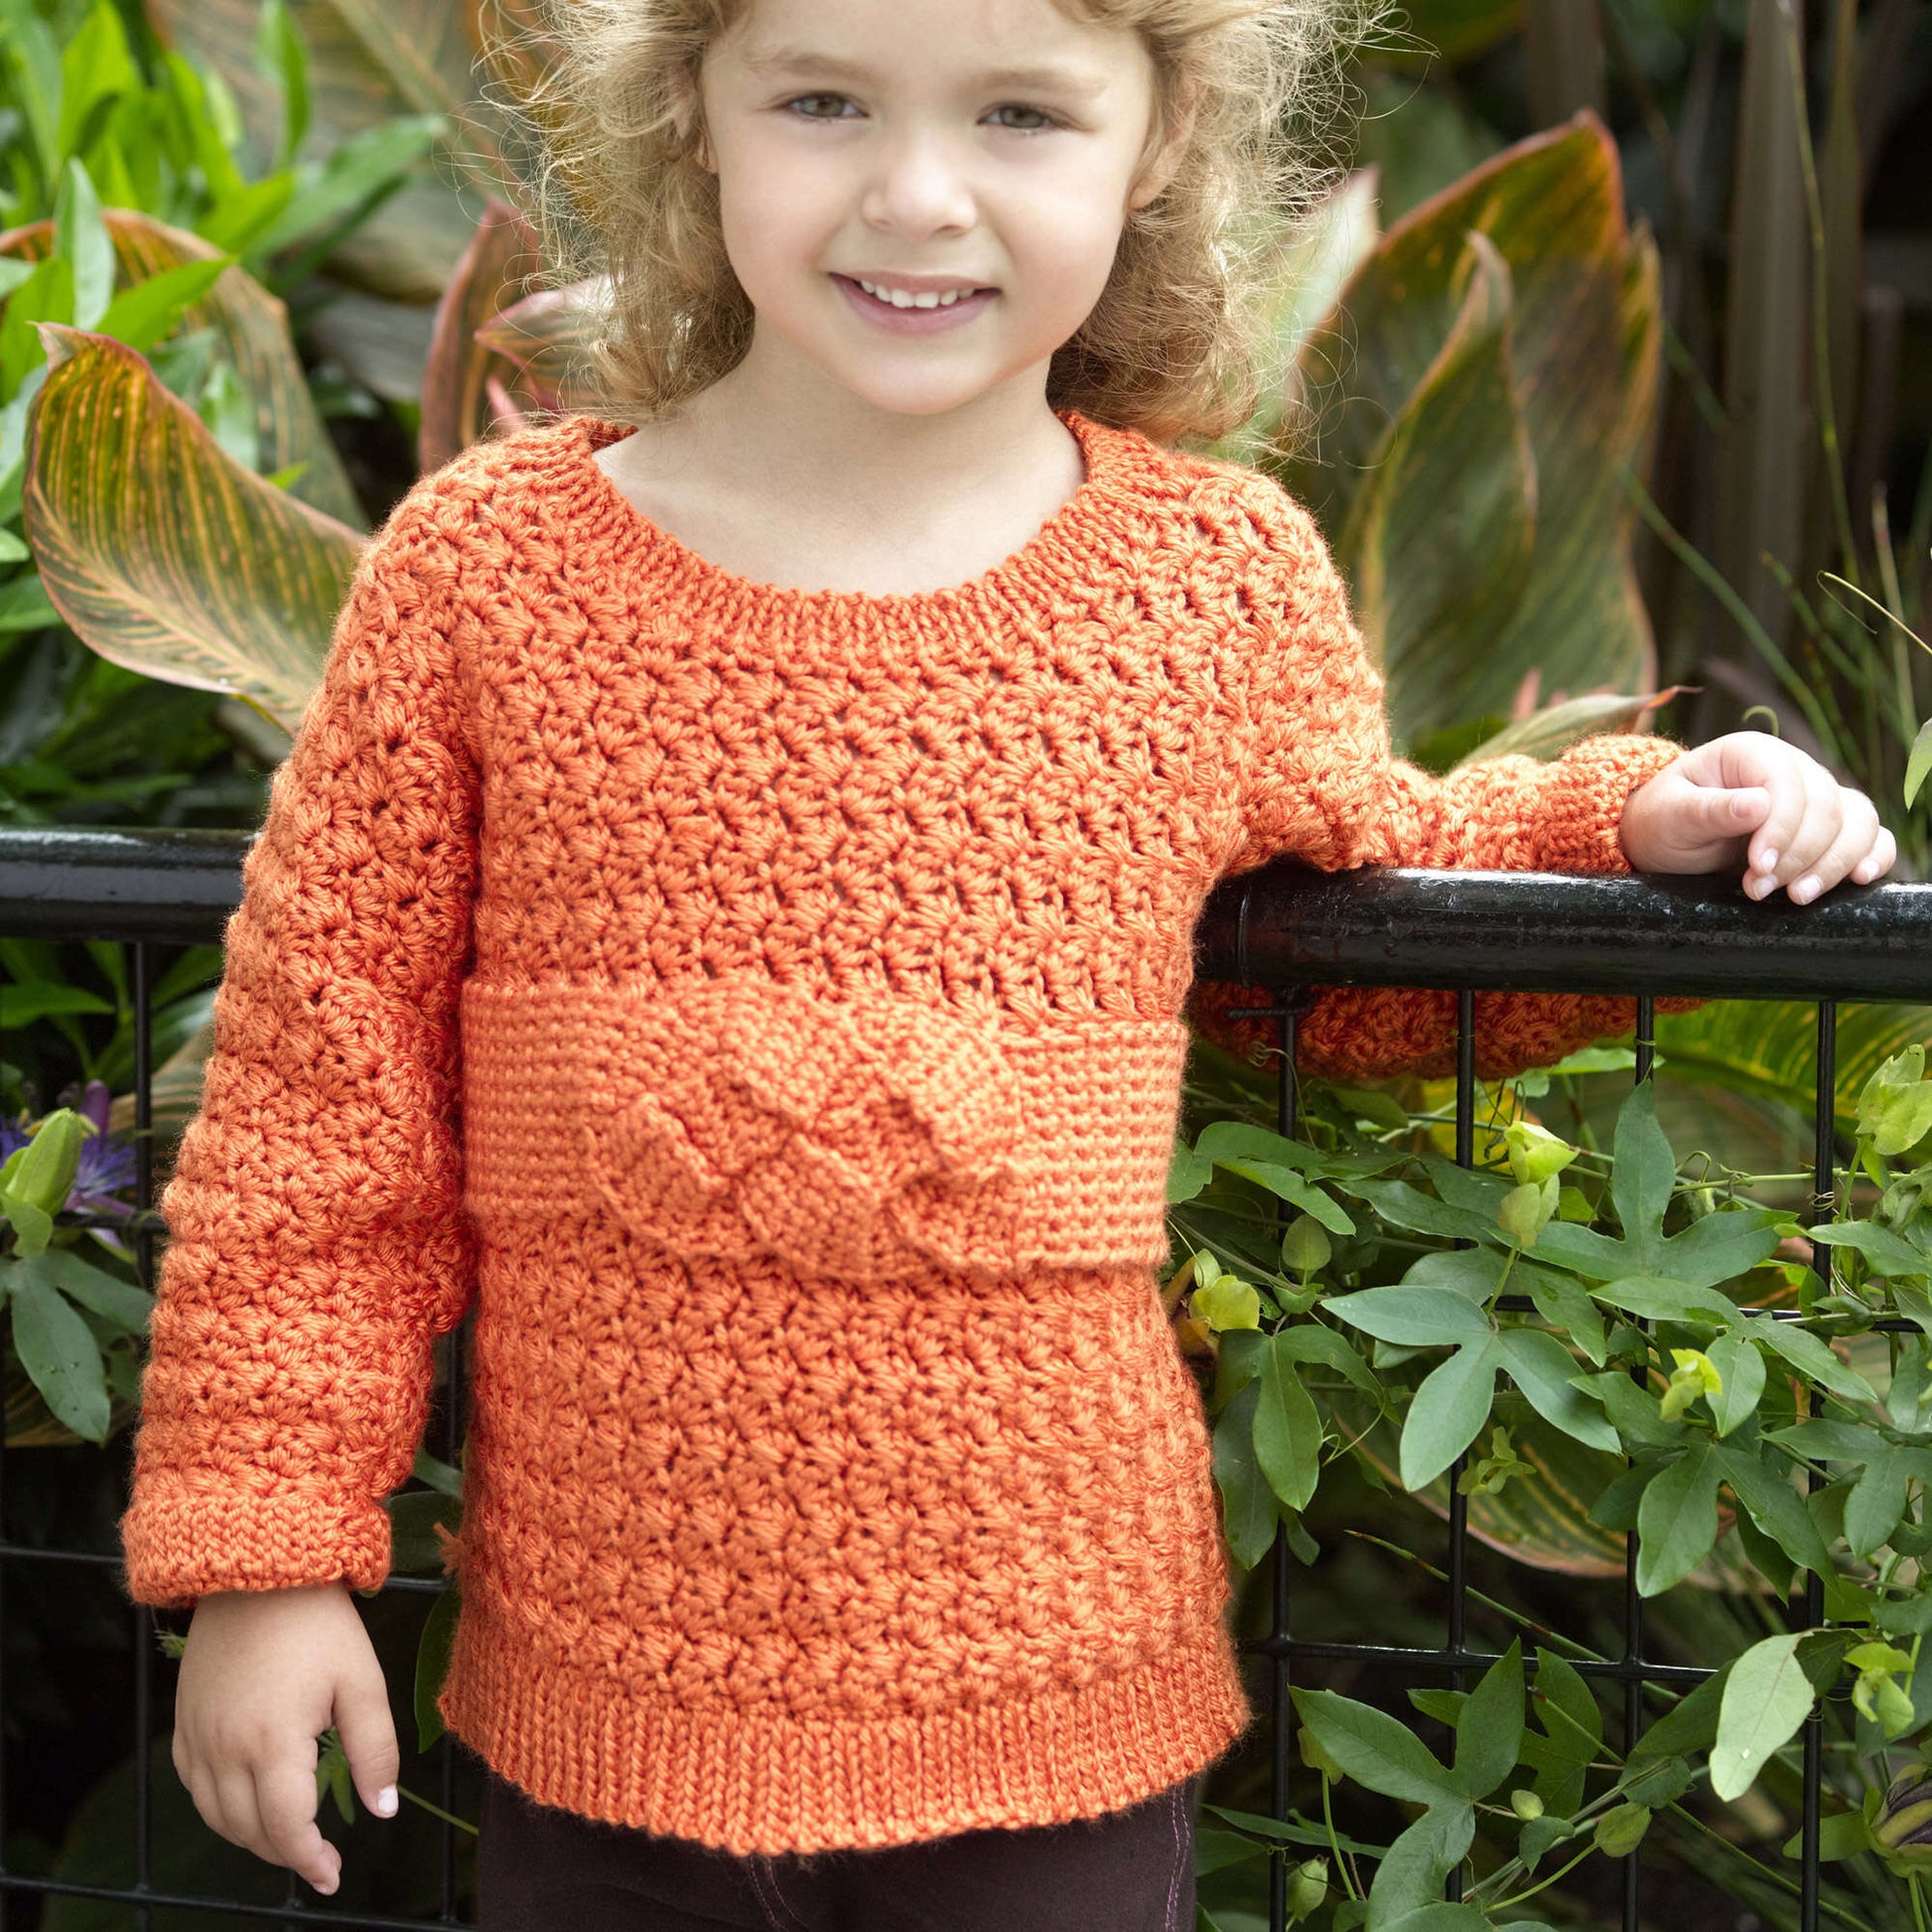 Free Red Heart Child's Friendship Knot Sweater Crochet Pattern